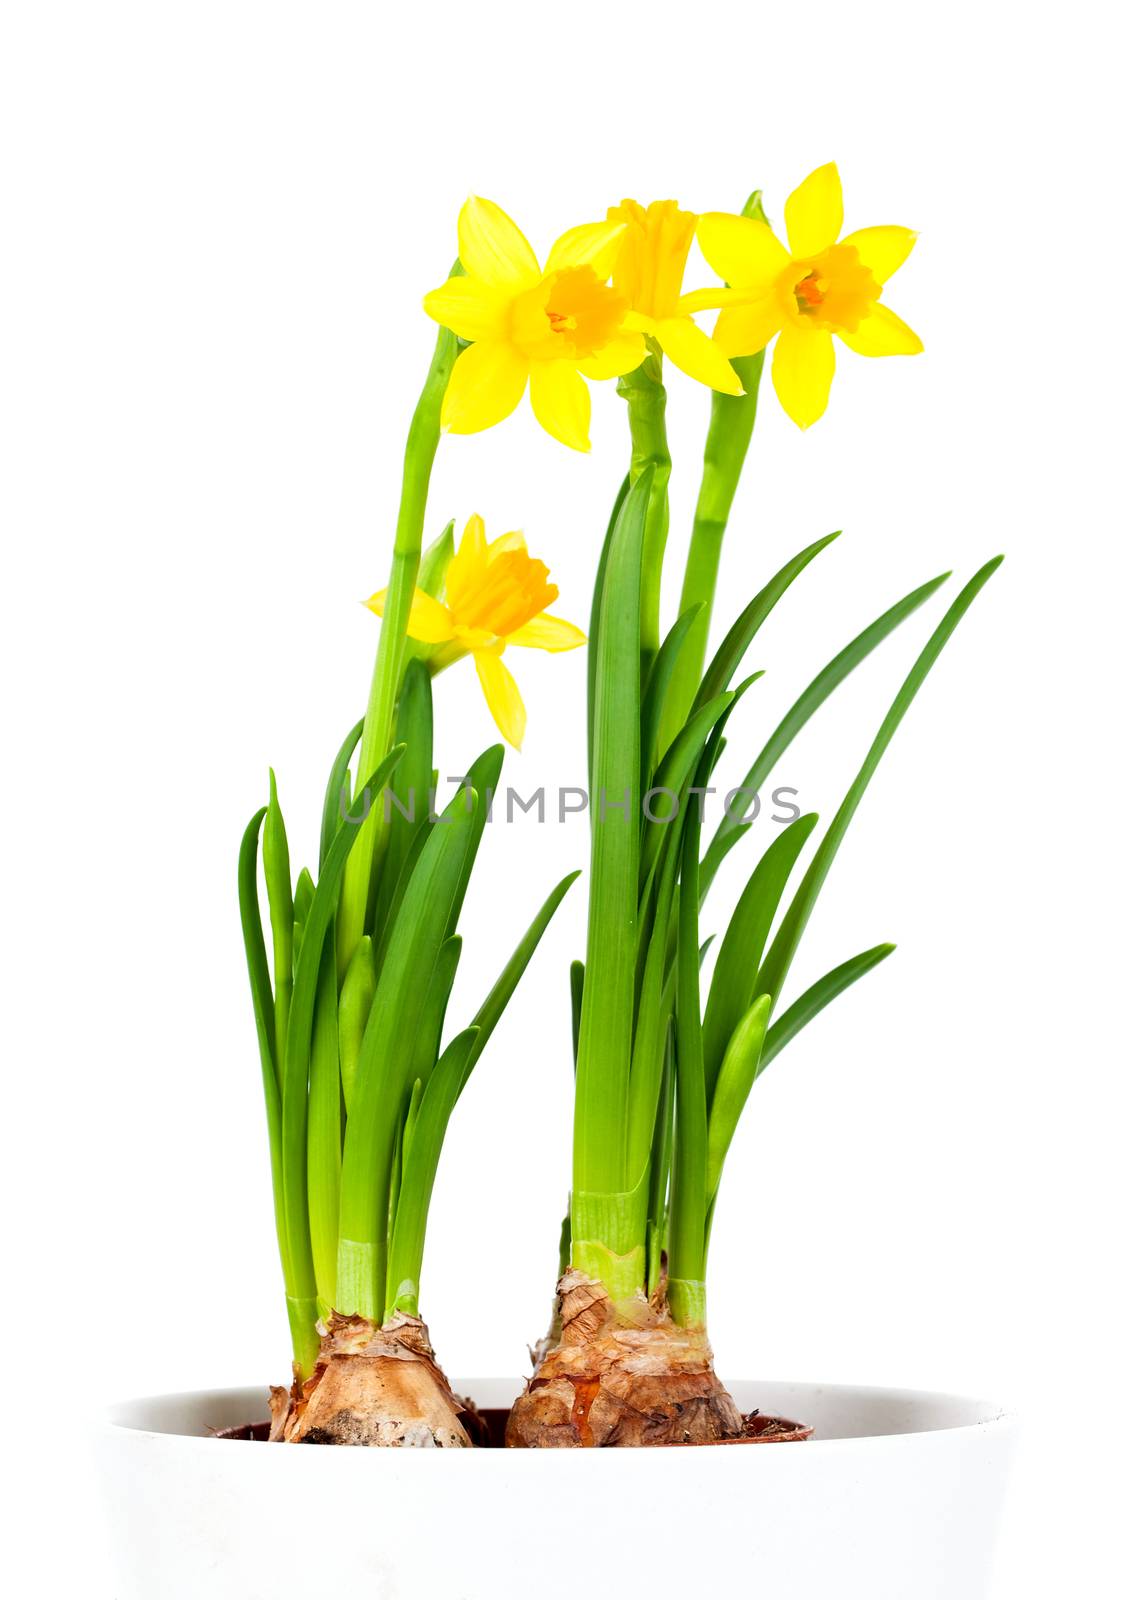 Daffodils (Narcissus) in flower pot by motorolka